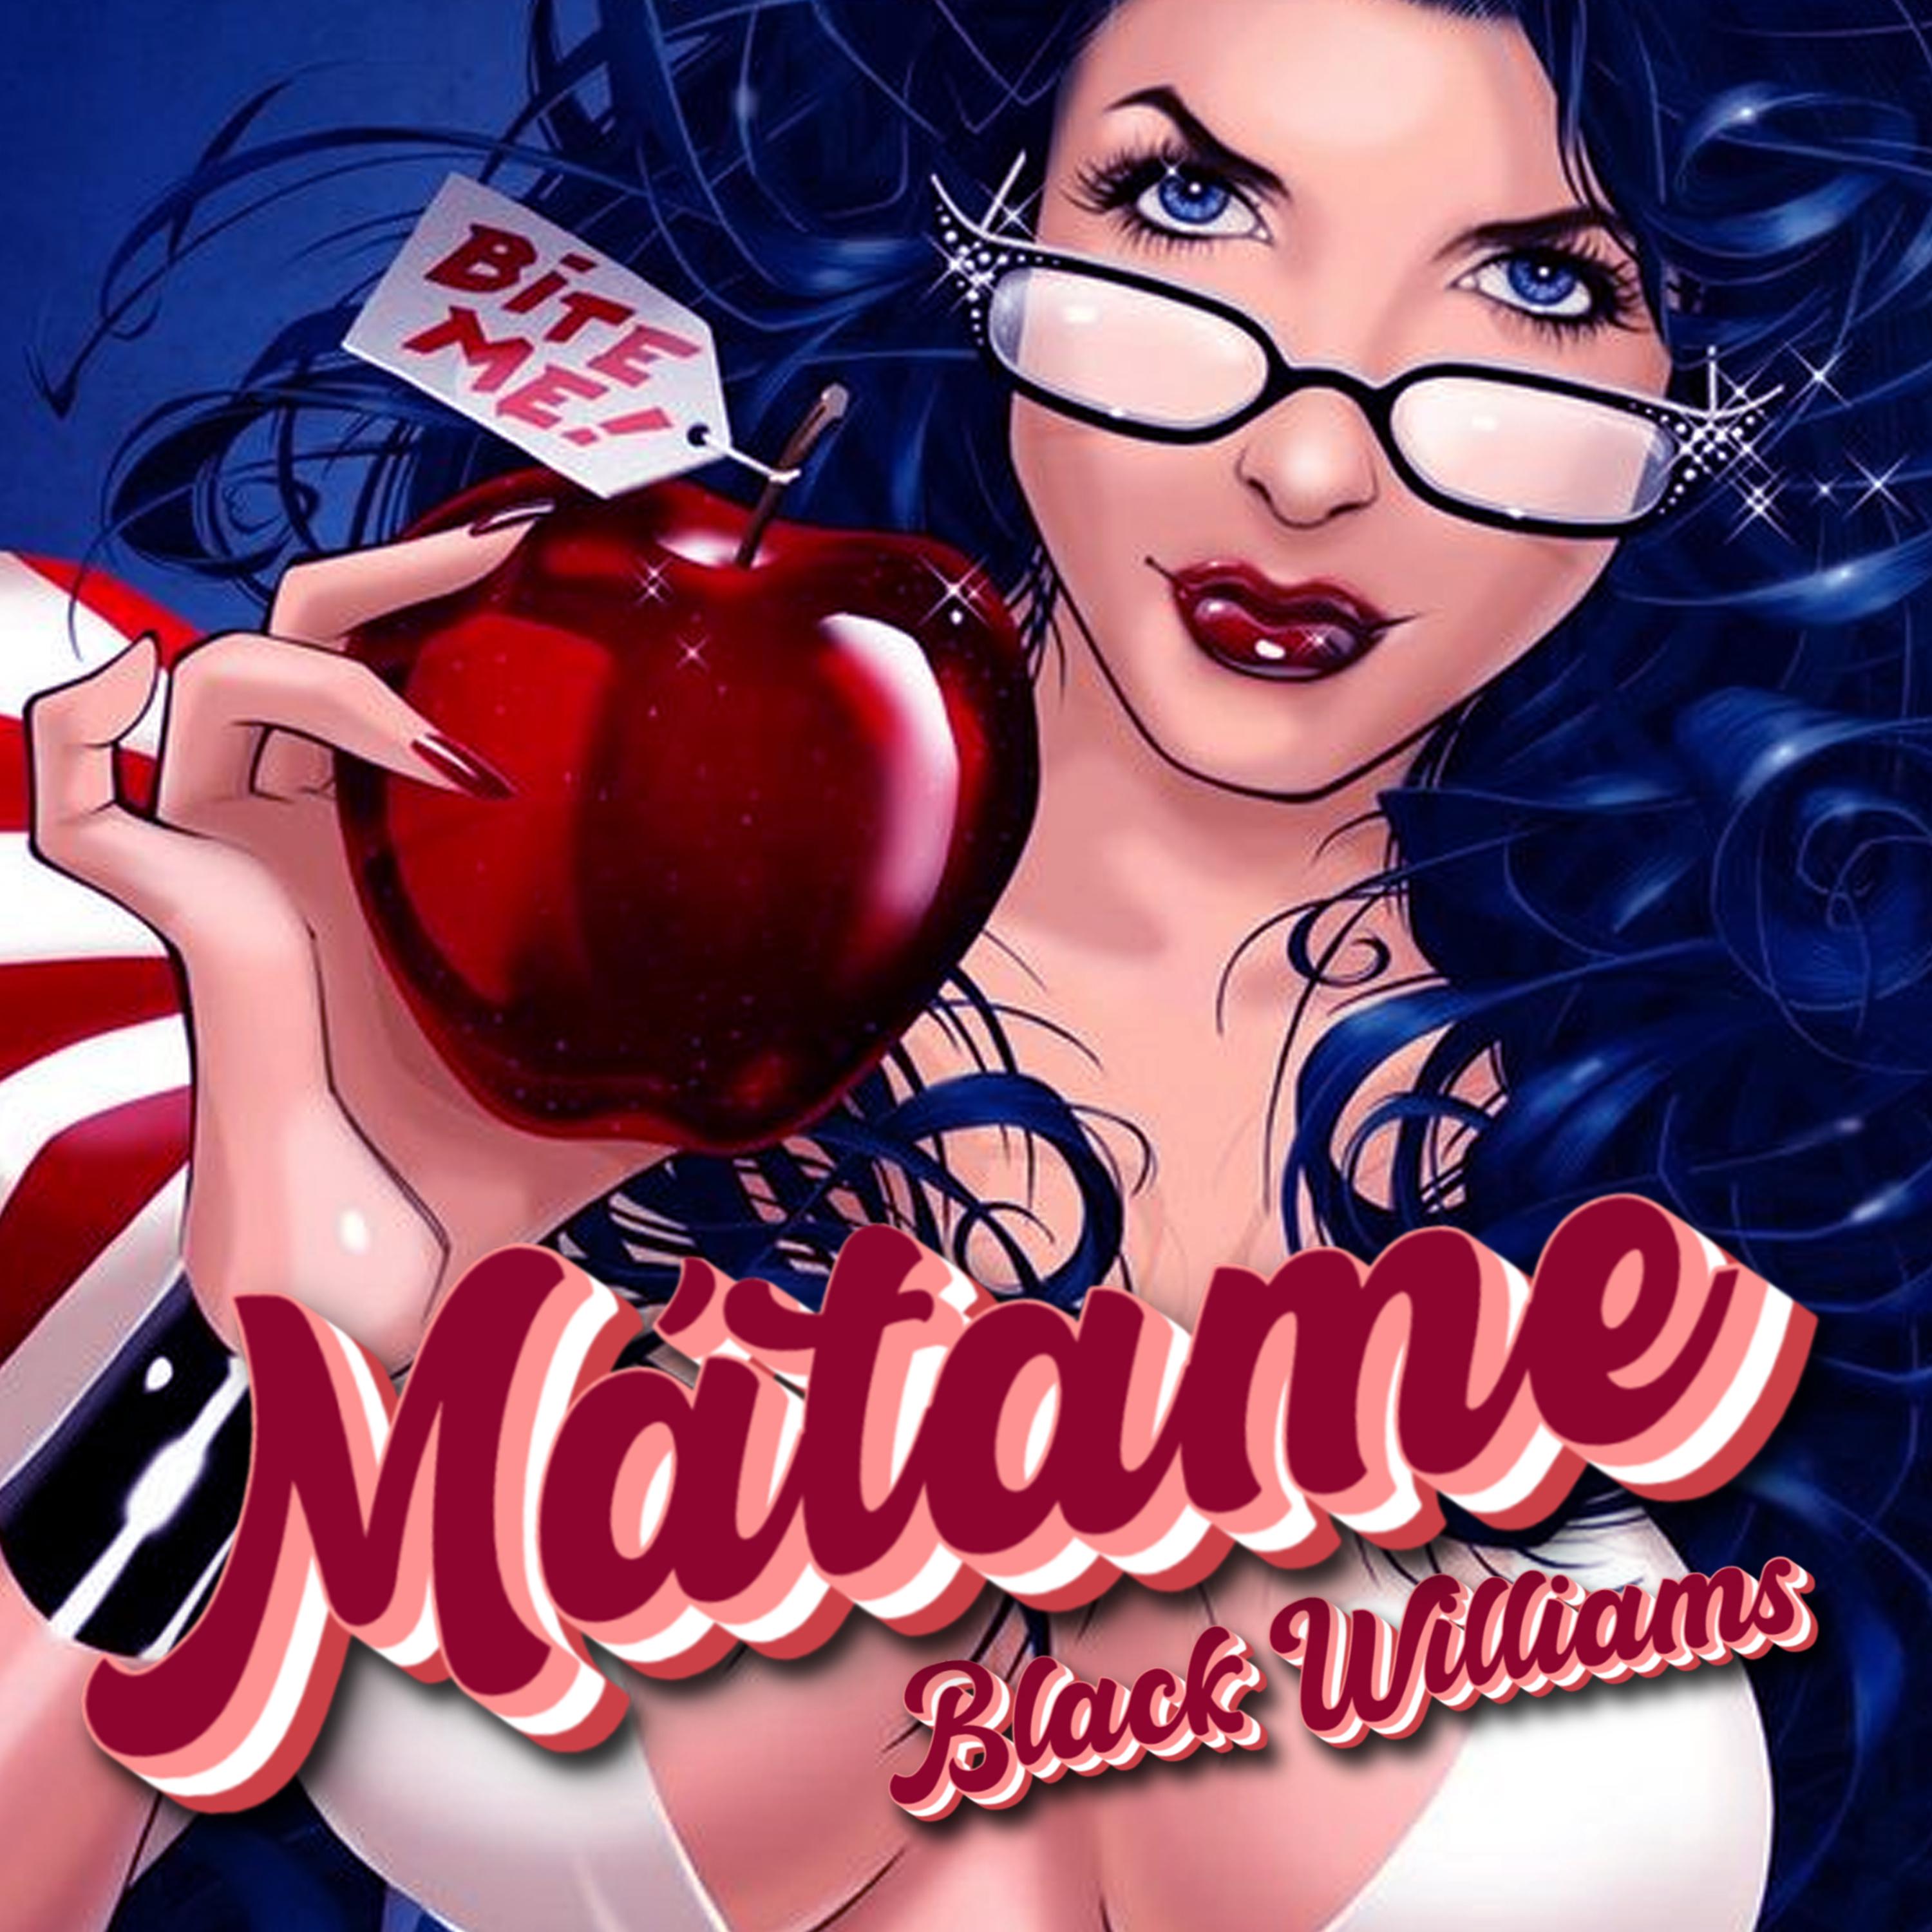 Постер альбома Matame